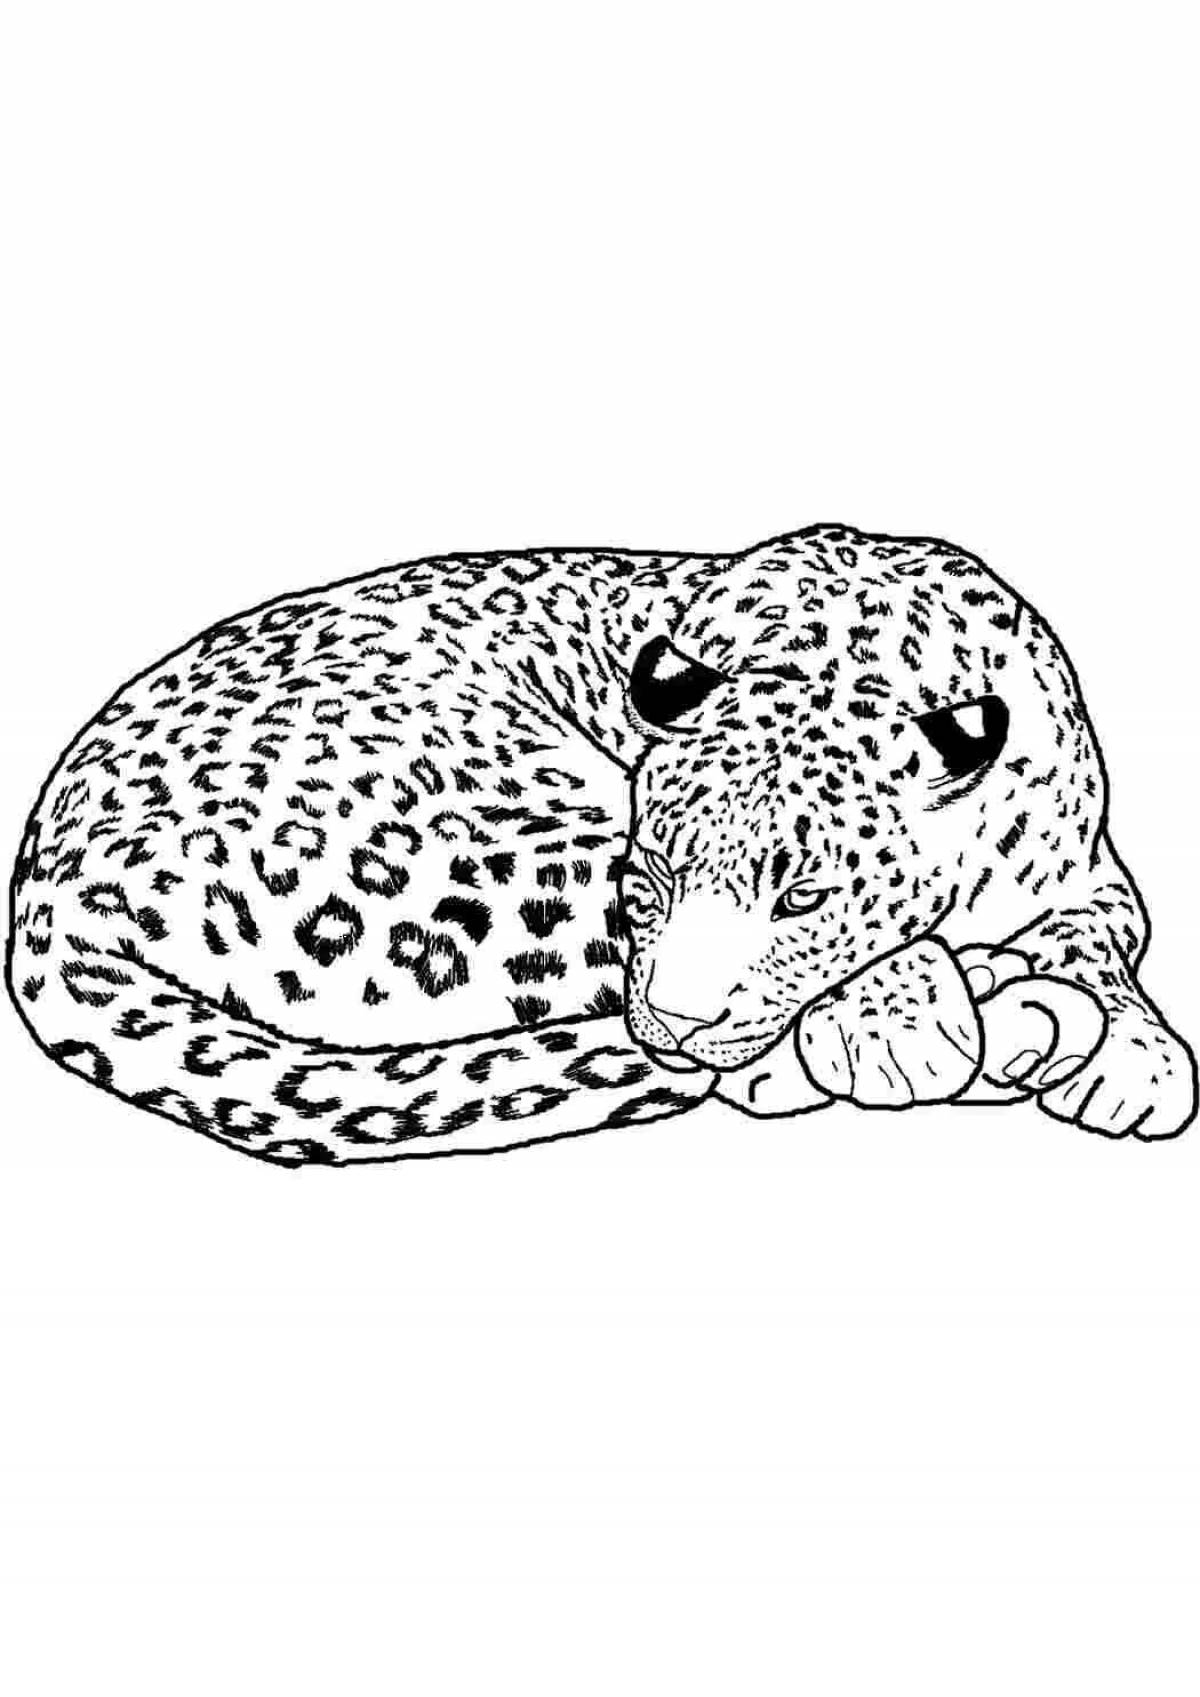 Coloring playful snow leopard